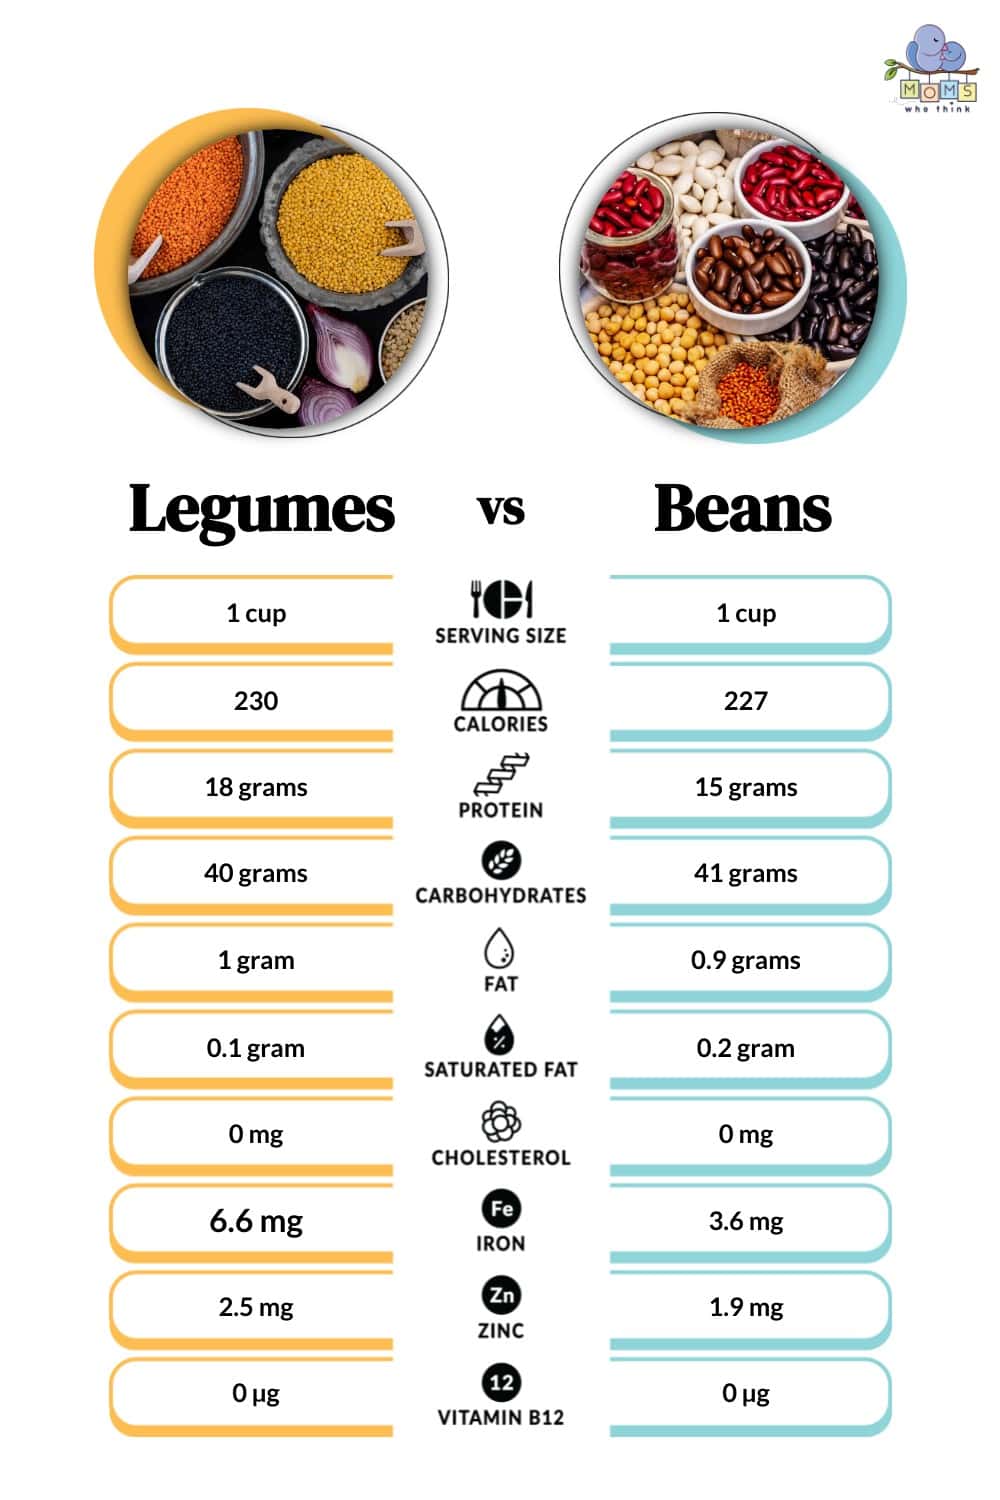 Legumes vs Beans Nutritional Facts